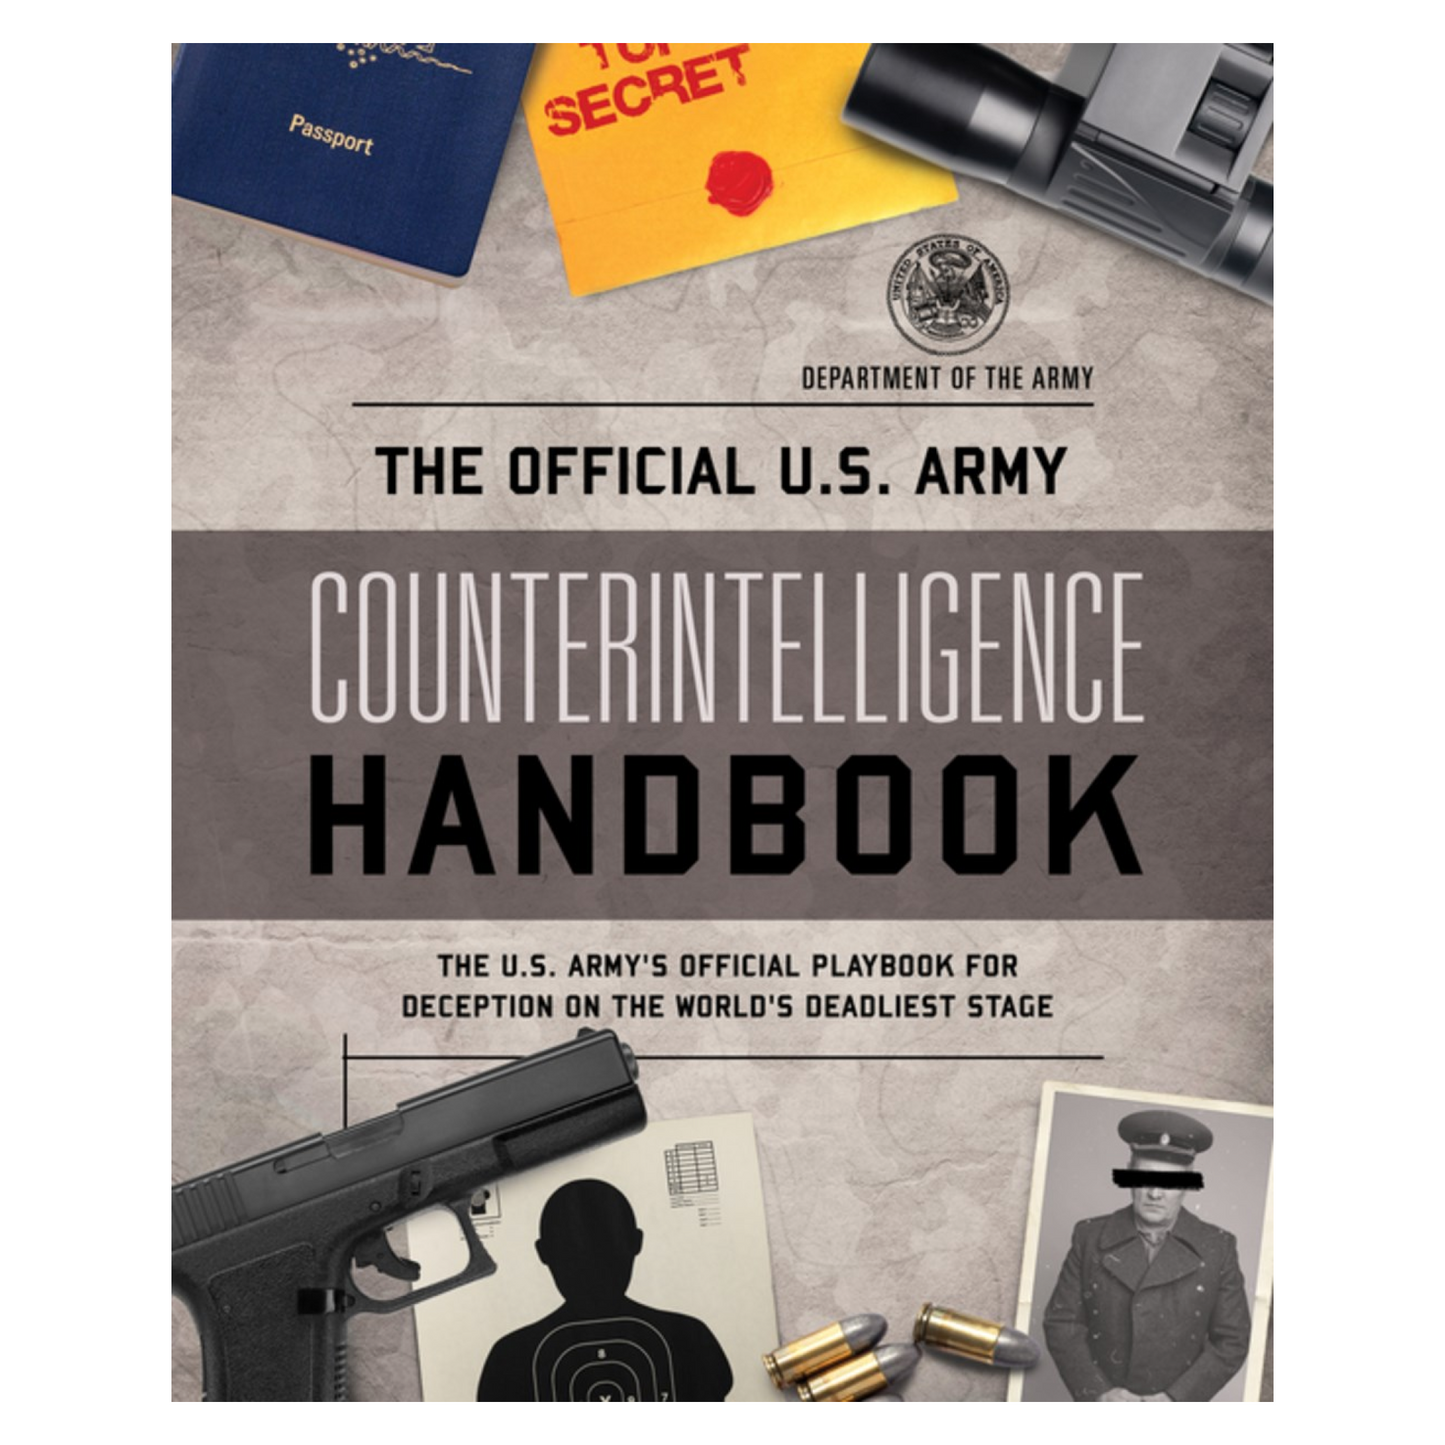 The Official U.S. Army Counterintelligence Handbook